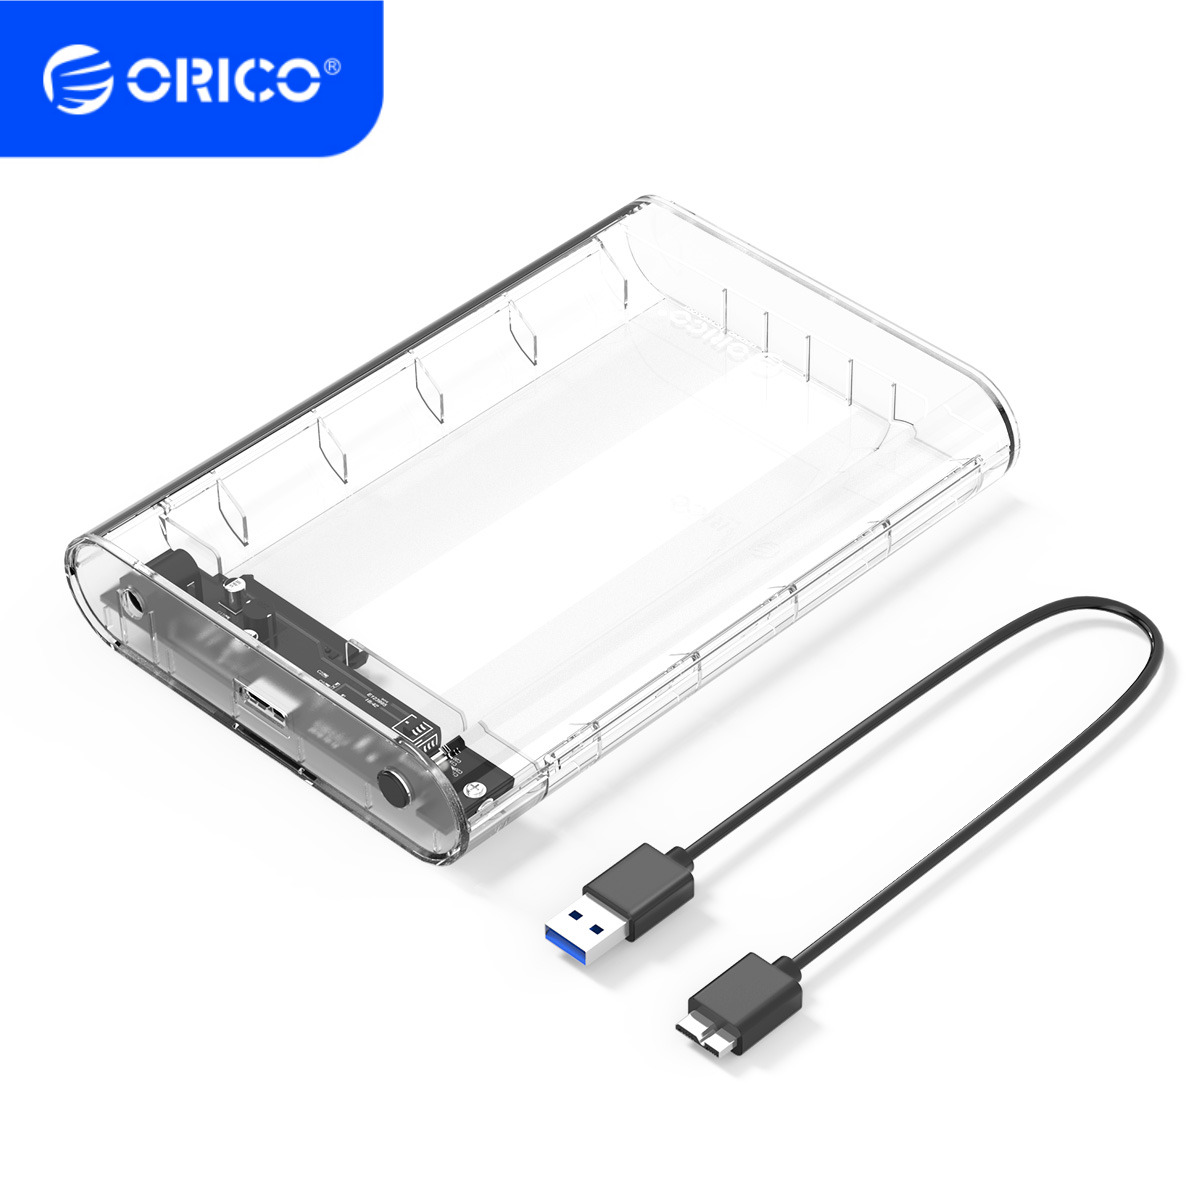 ORICO 3.5'' USB 3.0 Hard Drive Enclosure for 2.5/3.5'' SATA HDD Support UASP 8TB